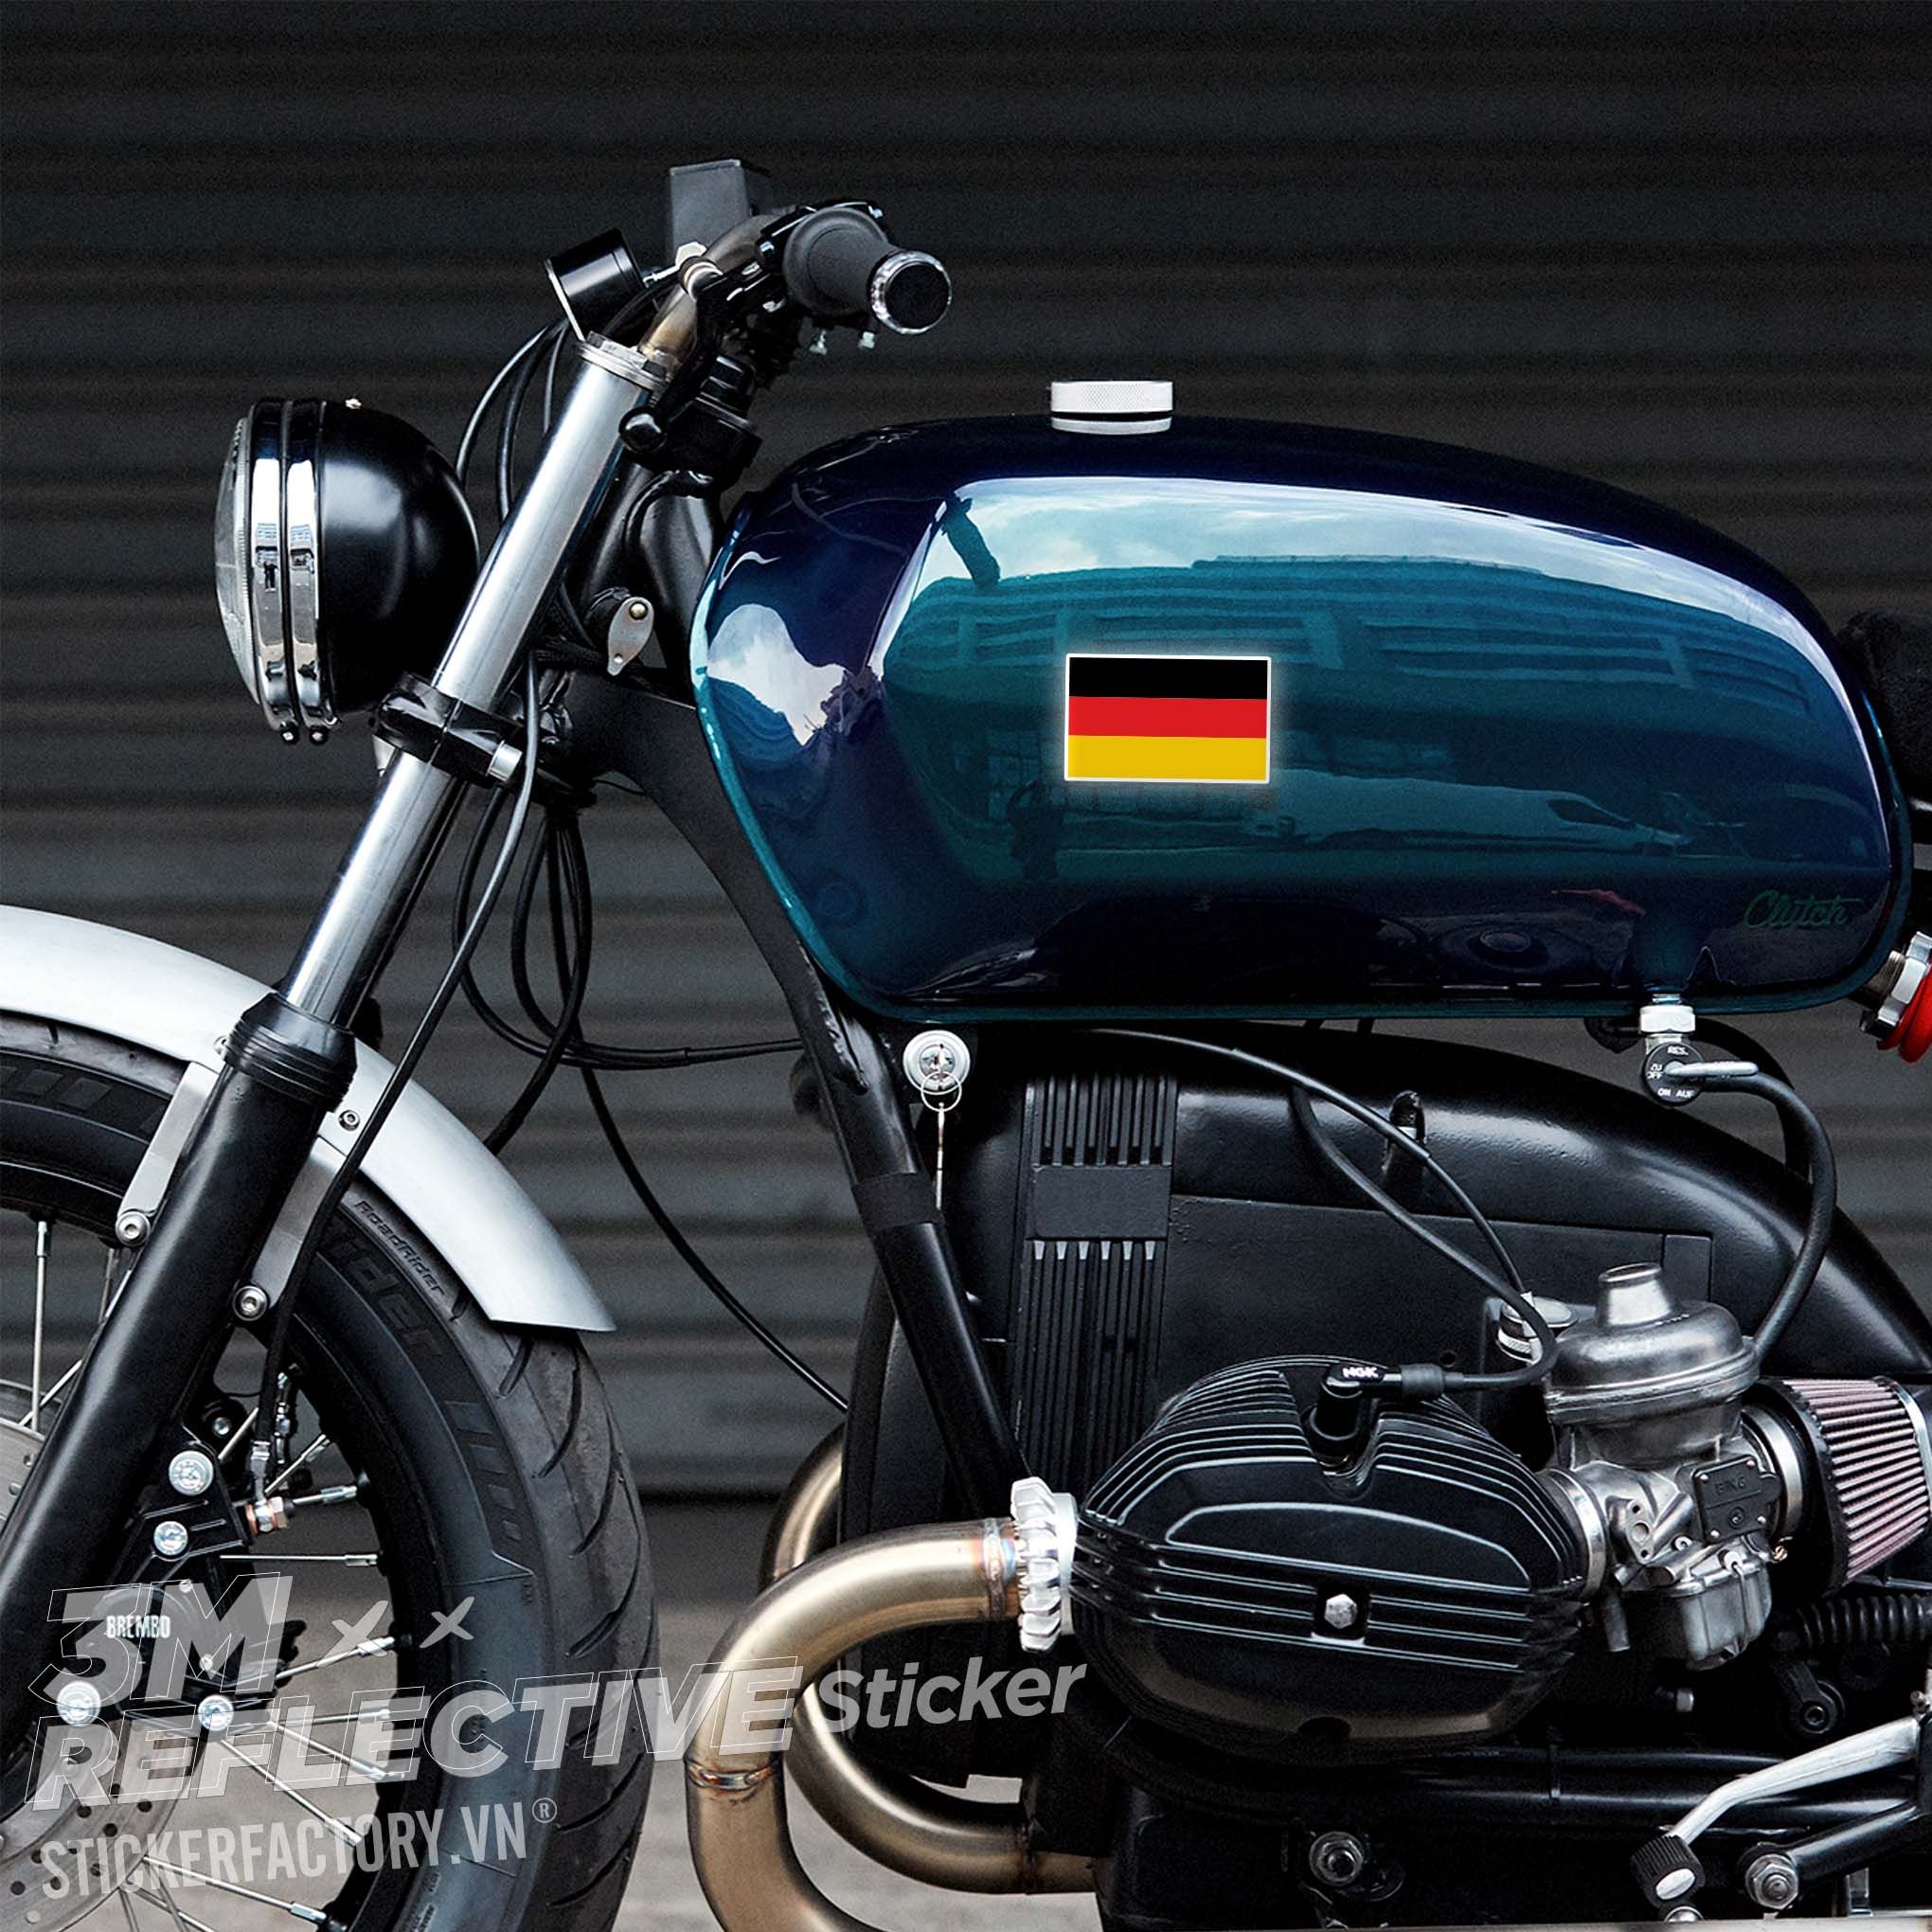 GERMANY FLAG 3M - Reflective Sticker Die-cut